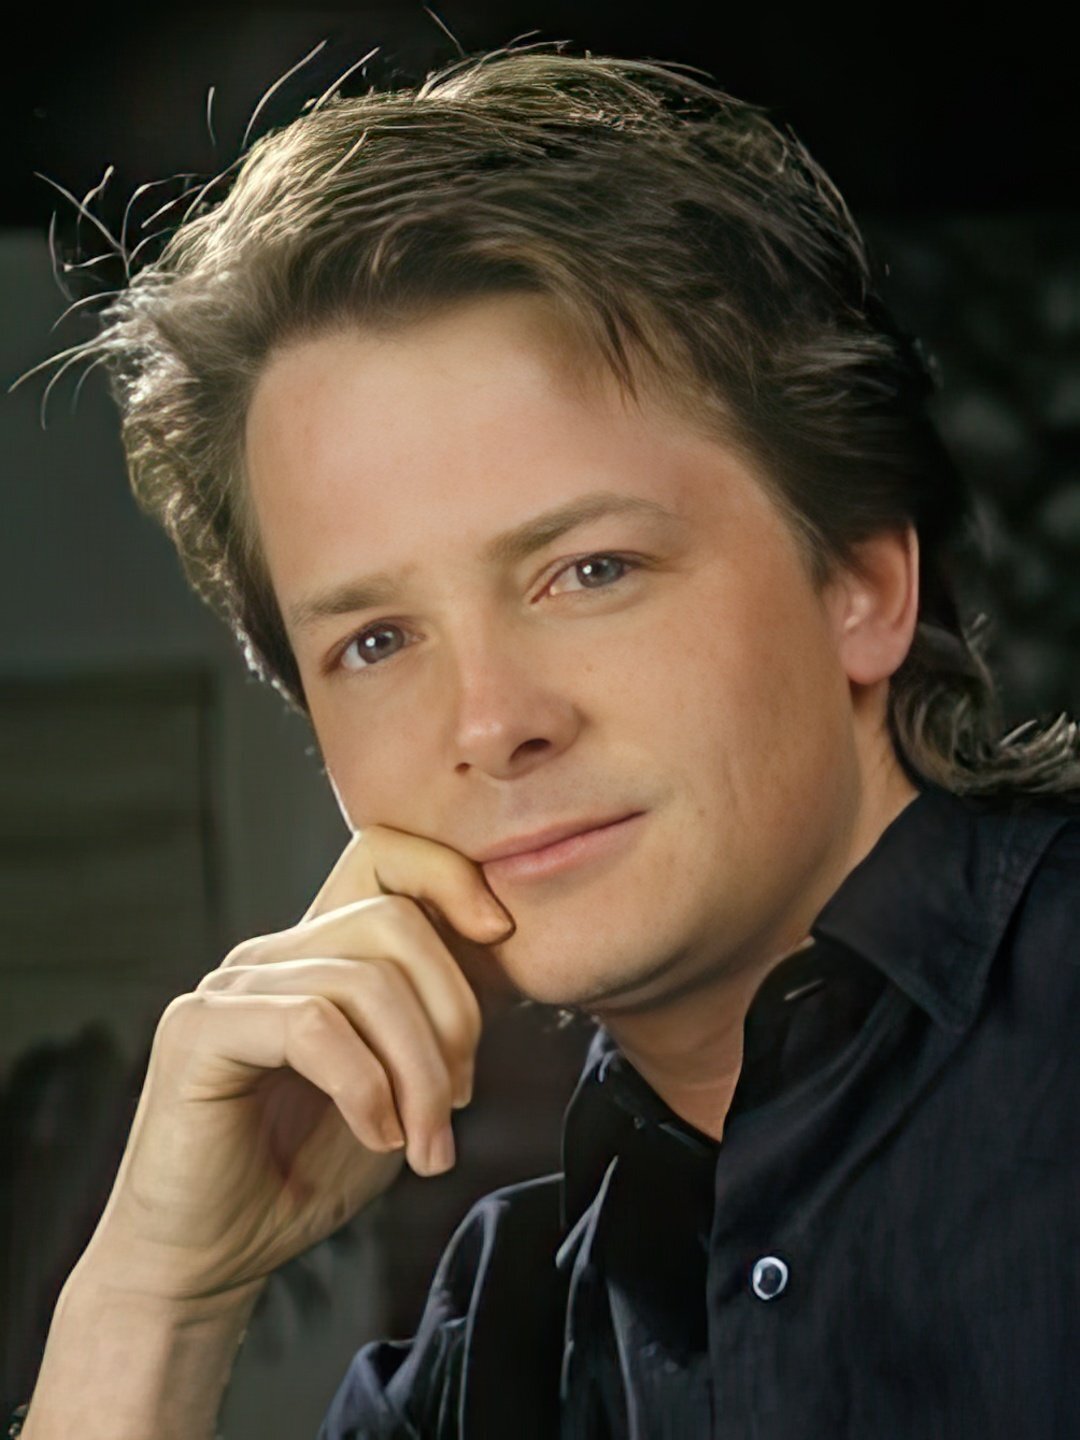 Michael J. Fox dating history